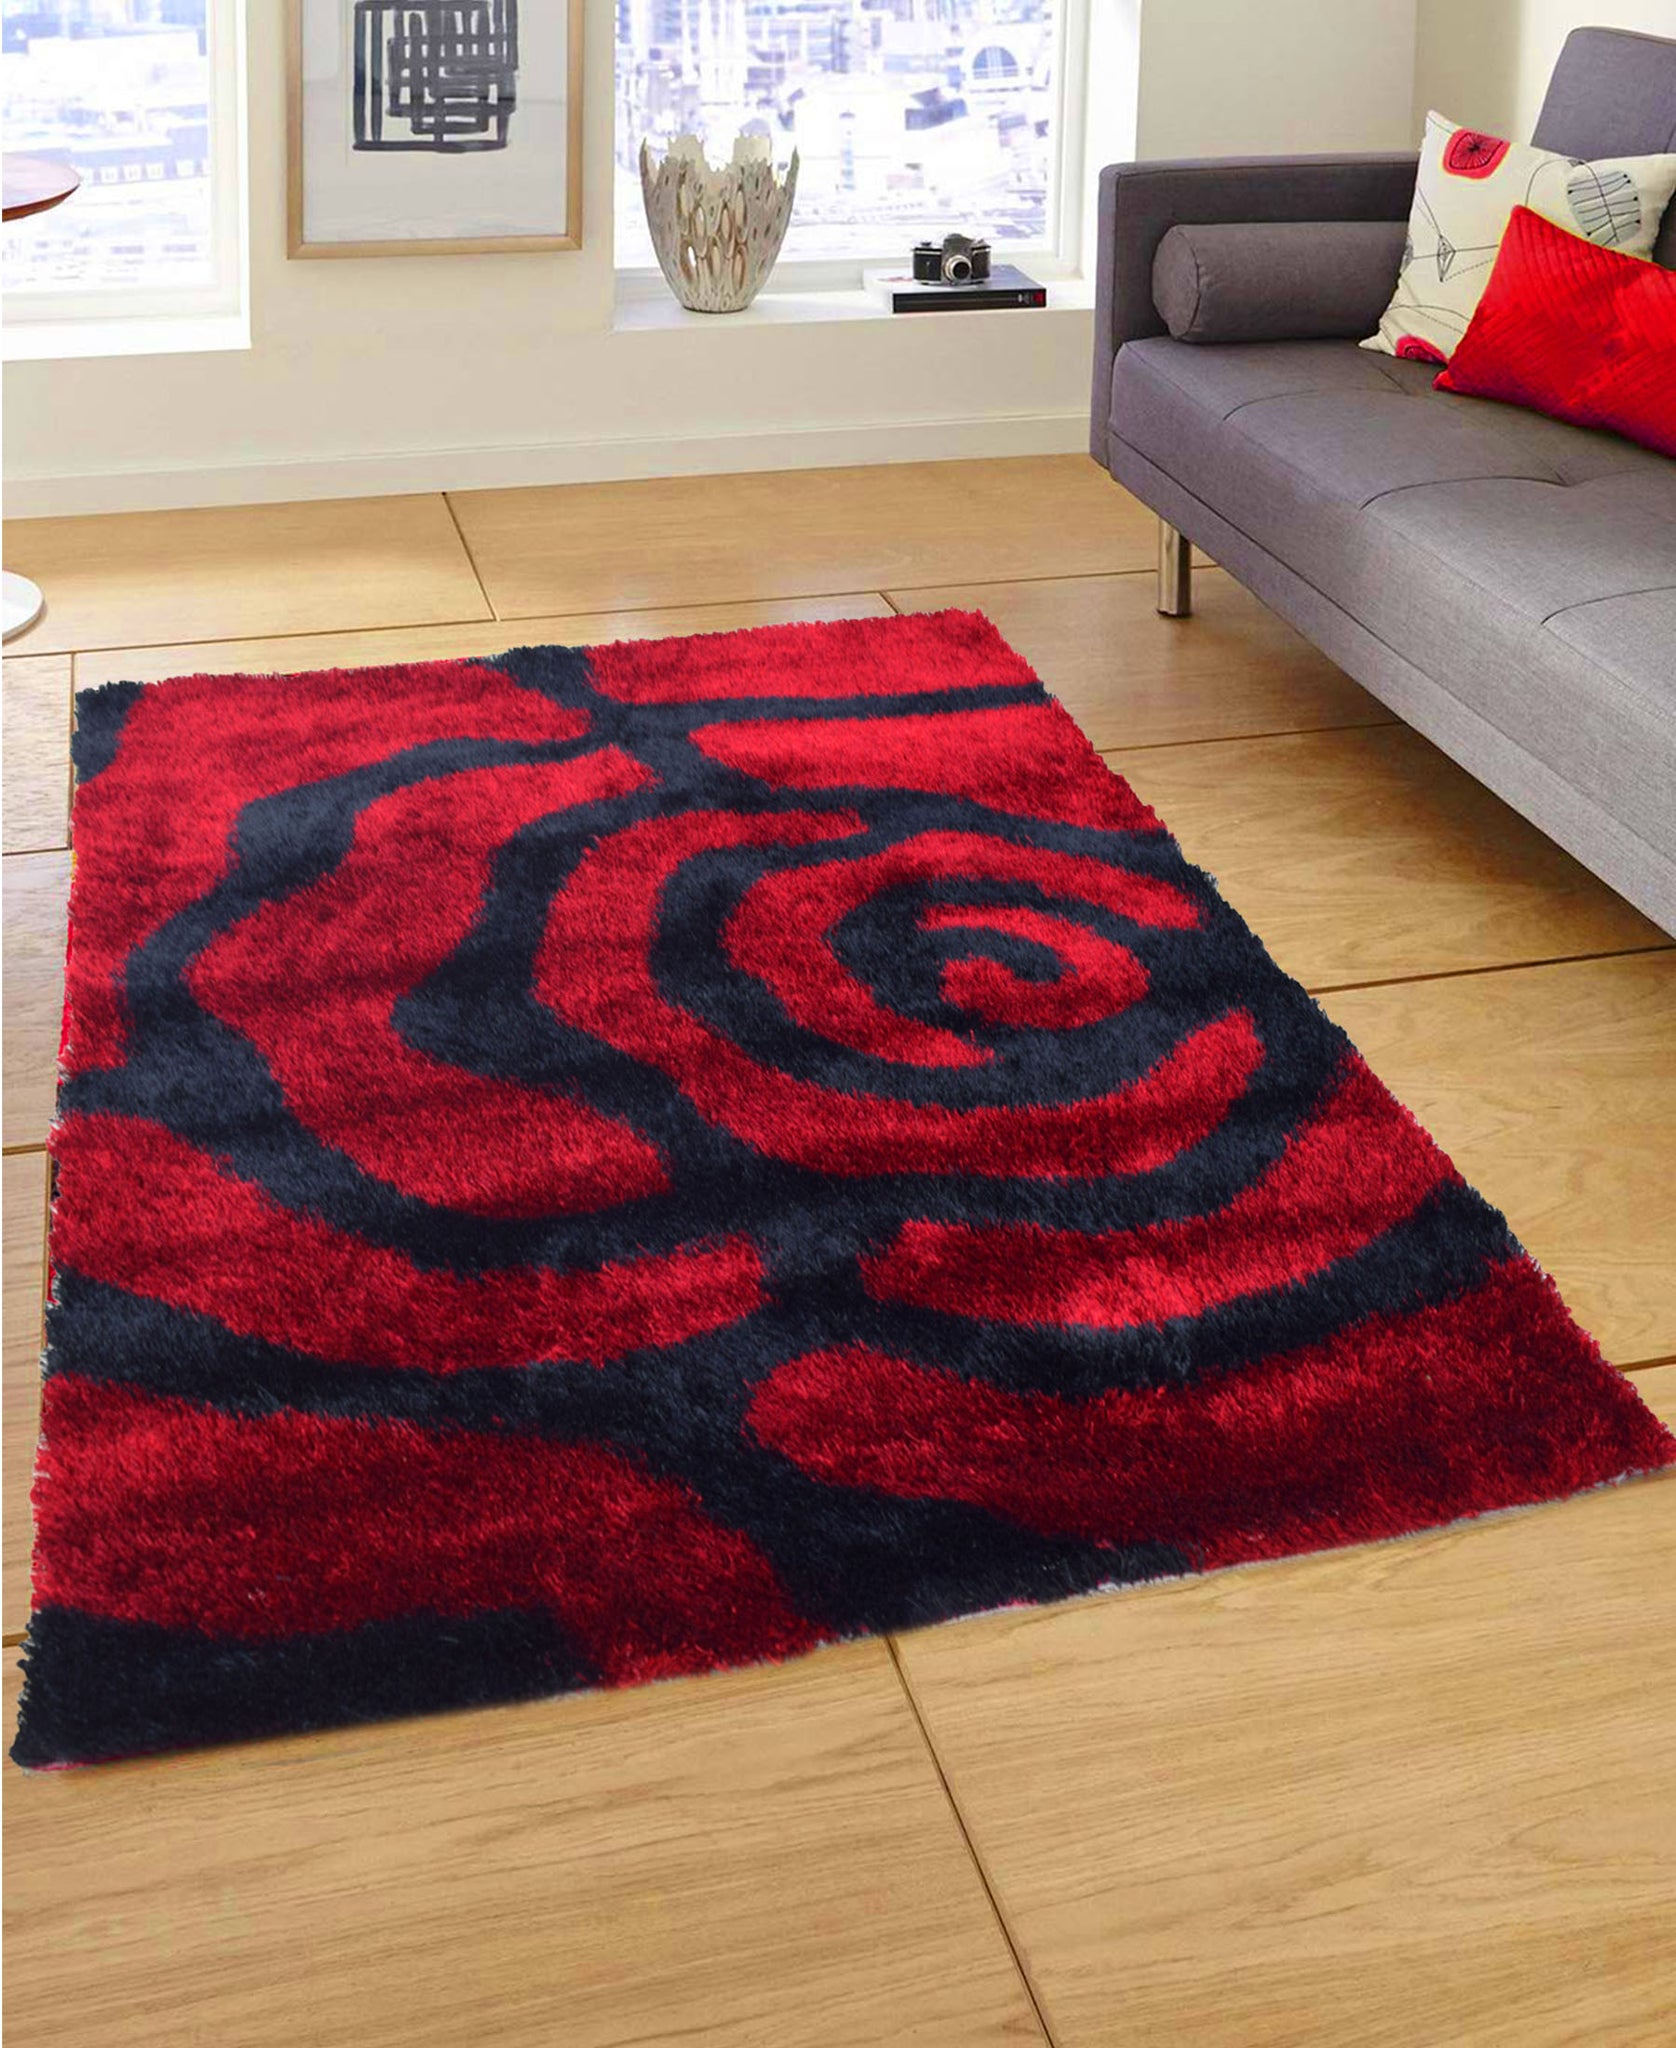 Shaggy Rose Carpet 1600mm x 2200mm - Red